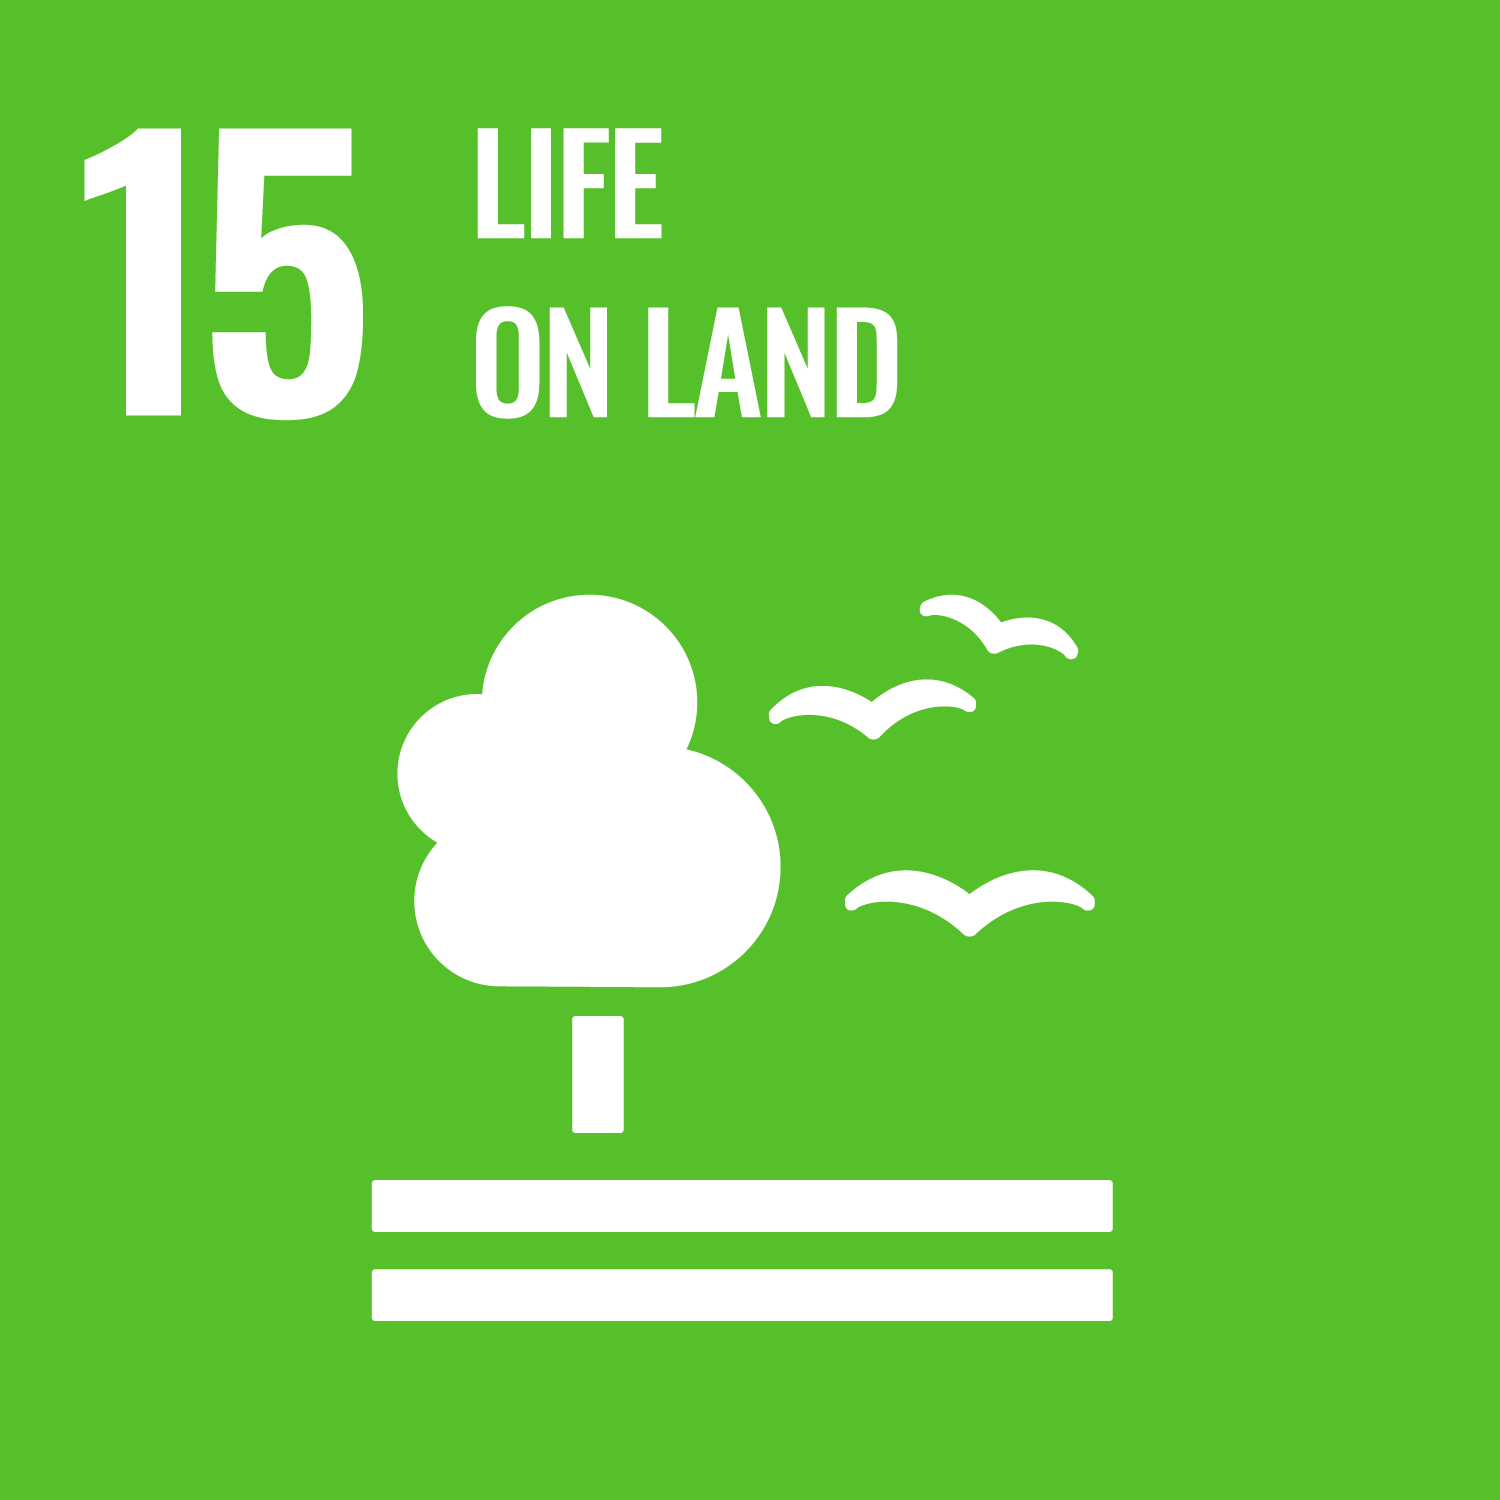 Sustainable Development Goal: SDG 15 "Life on land"